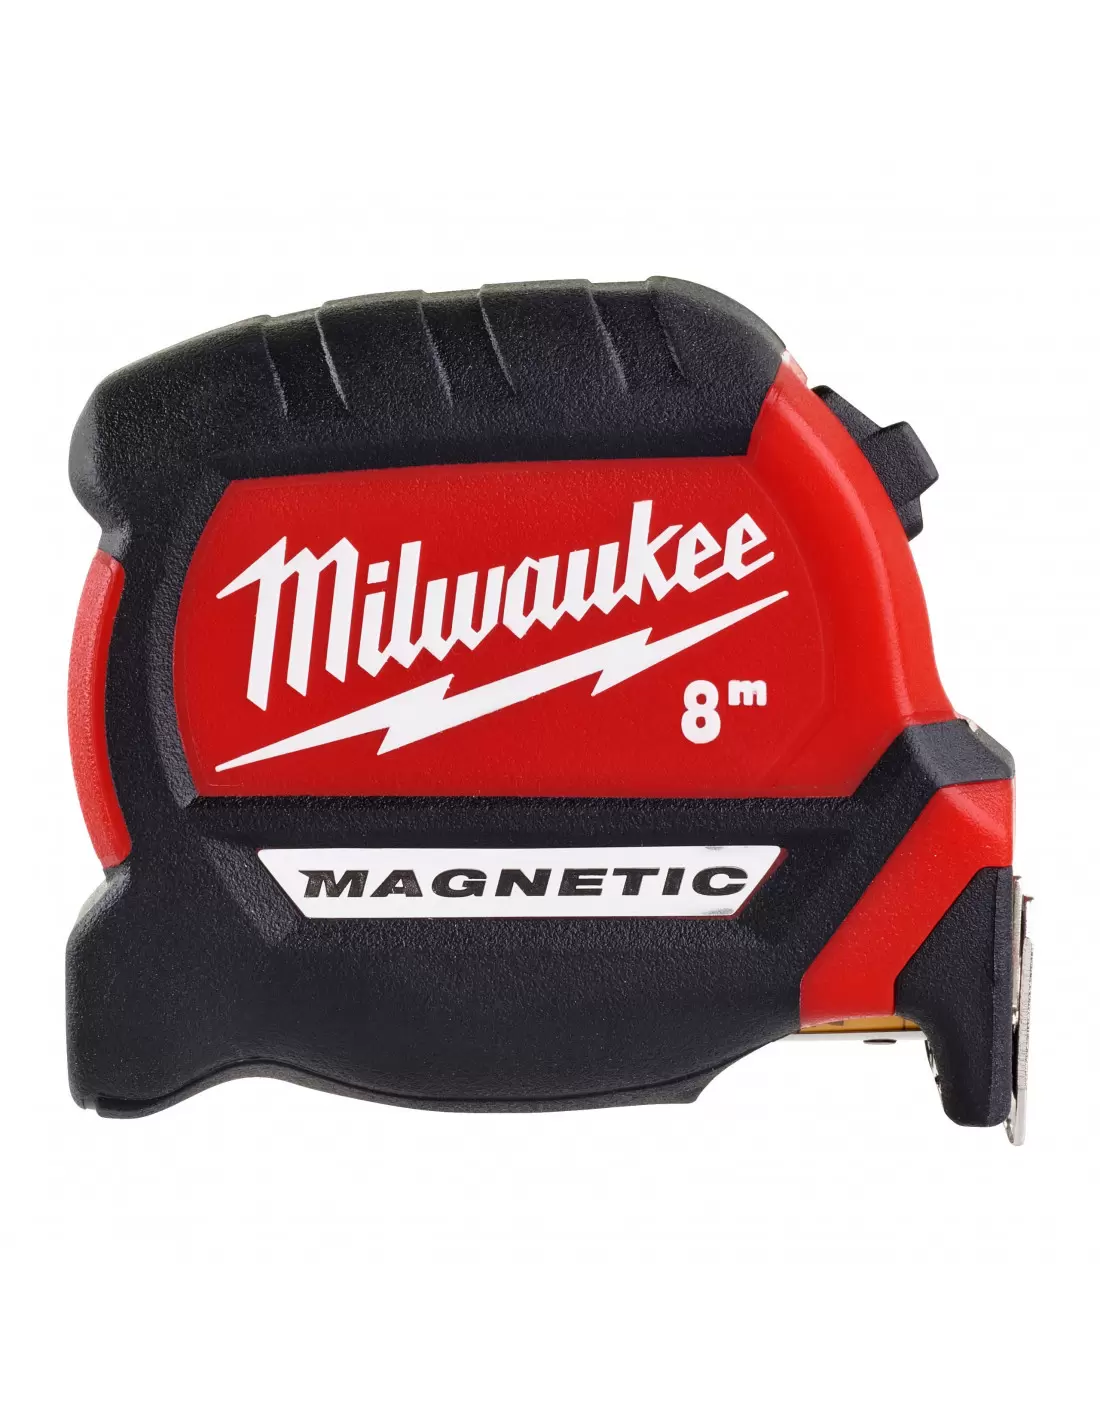 Mètre ruban magnétique 8m Premium, 4932464600 - Milwaukee